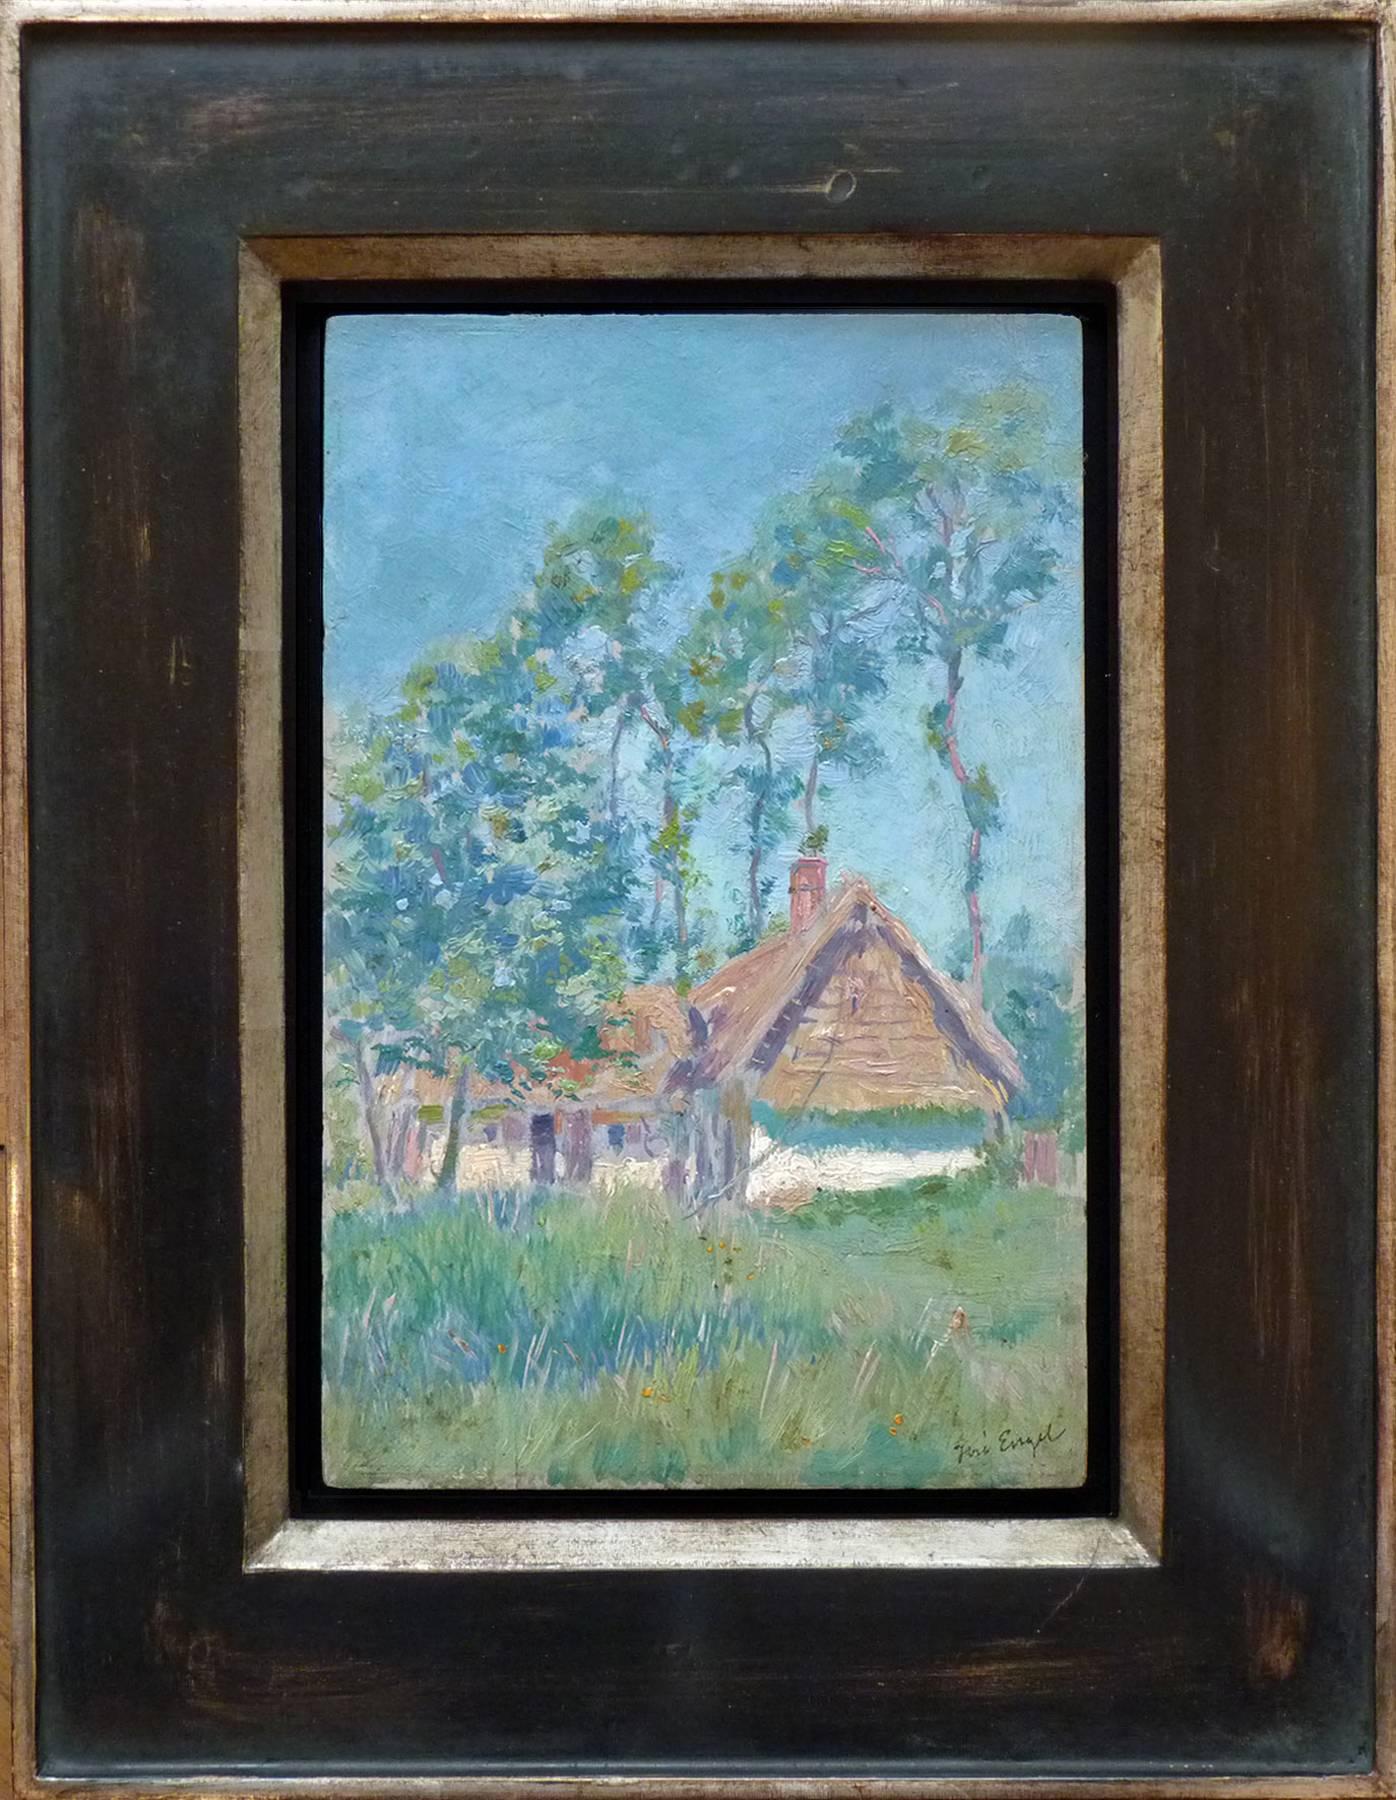 José Engel-Garry Landscape Painting - The Leroux Farm, c.1905, Atmospheric Oil Painting by French Artist Engel-Garry